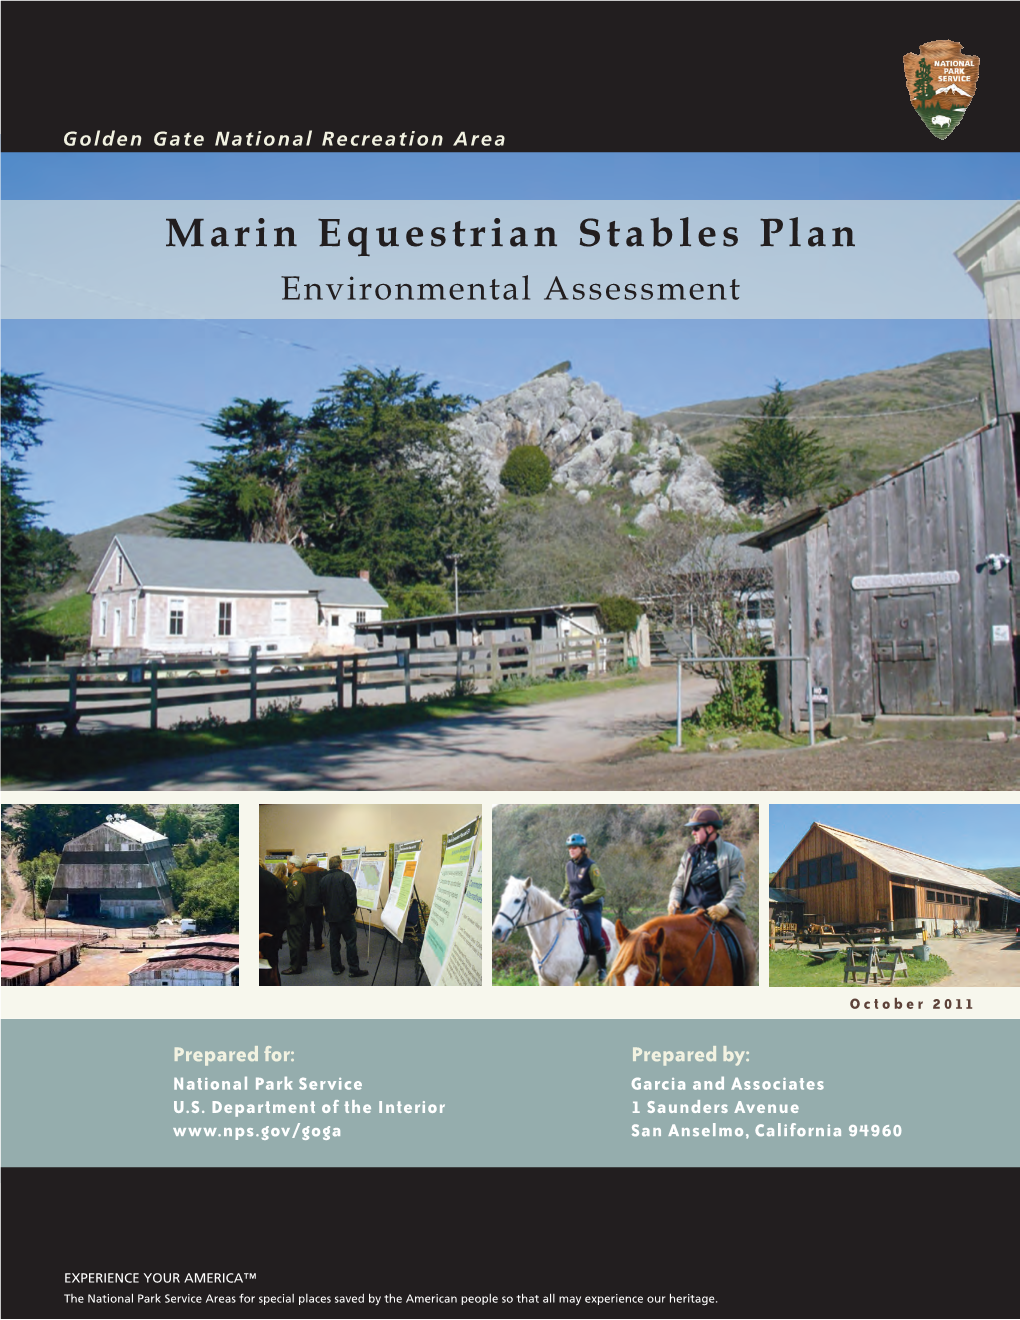 Marin Equestrian Stables Plan Environmental Assessment